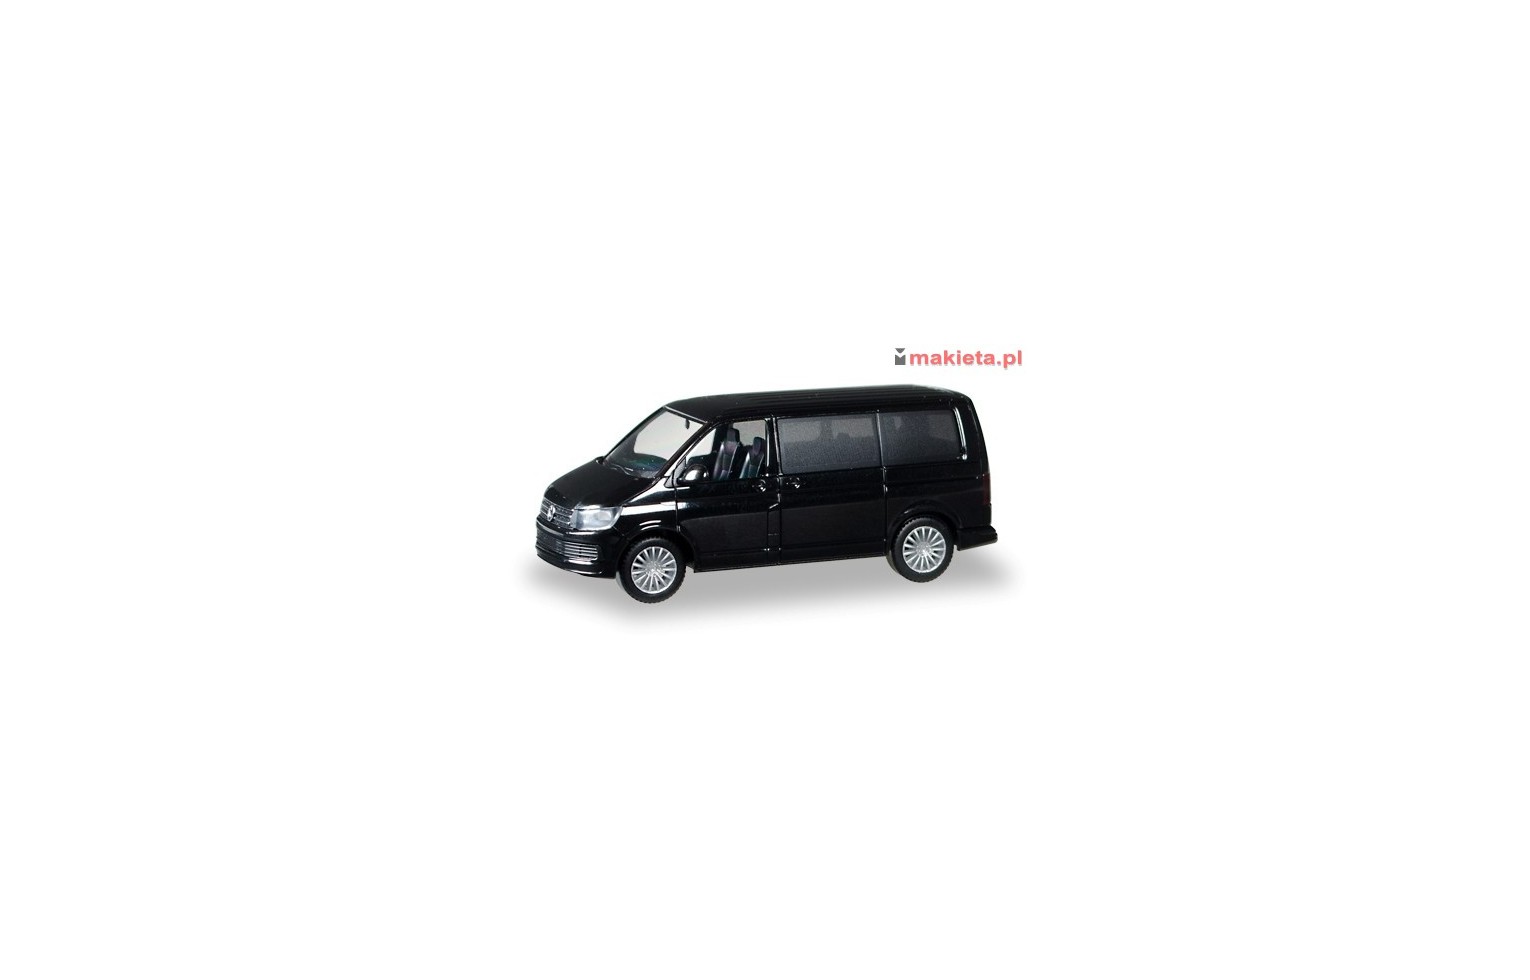 Herpa 028738, VW T6 Multivan, black, skala H0